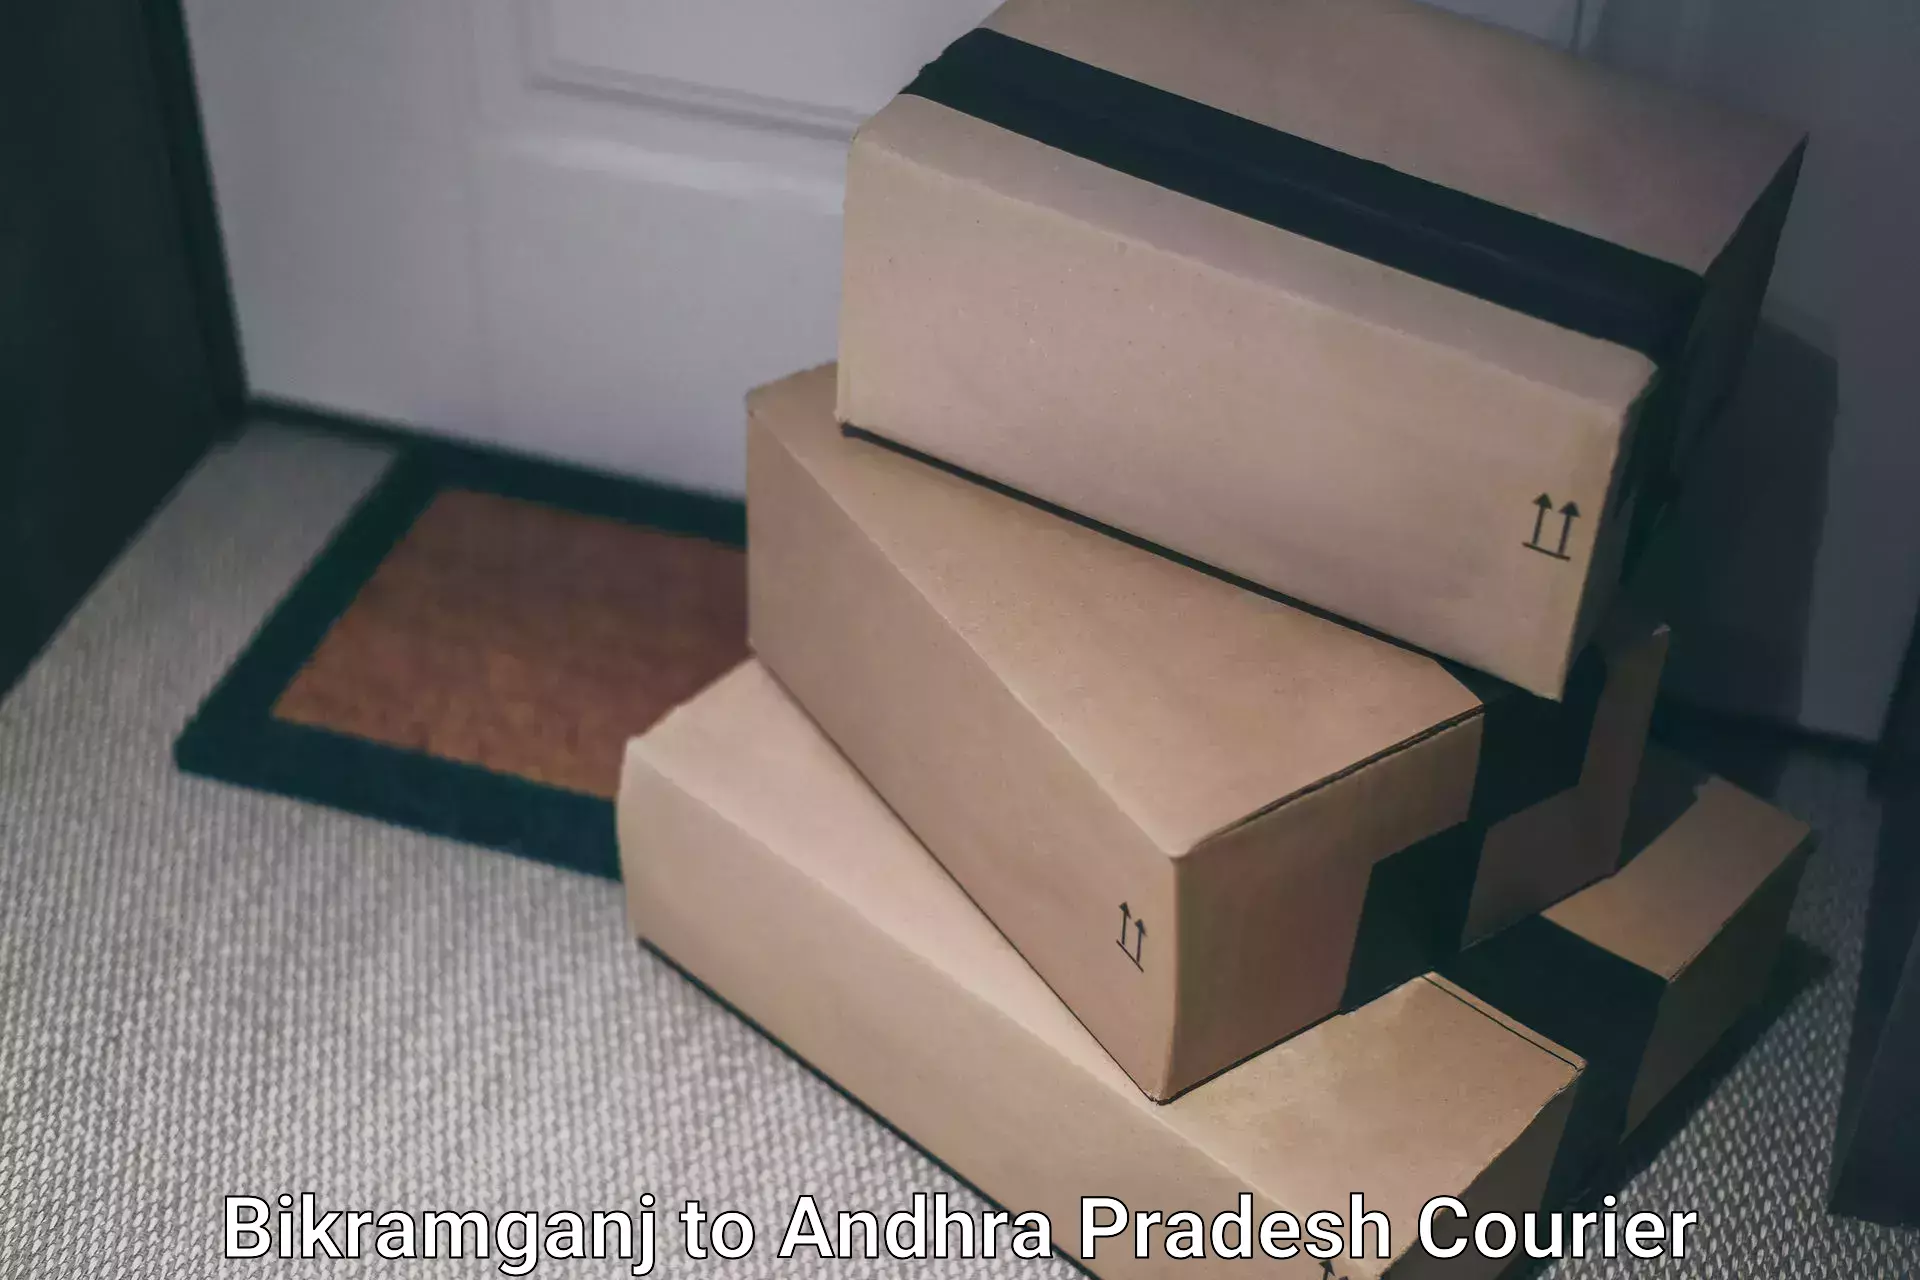 Flexible delivery scheduling in Bikramganj to Andhra Pradesh